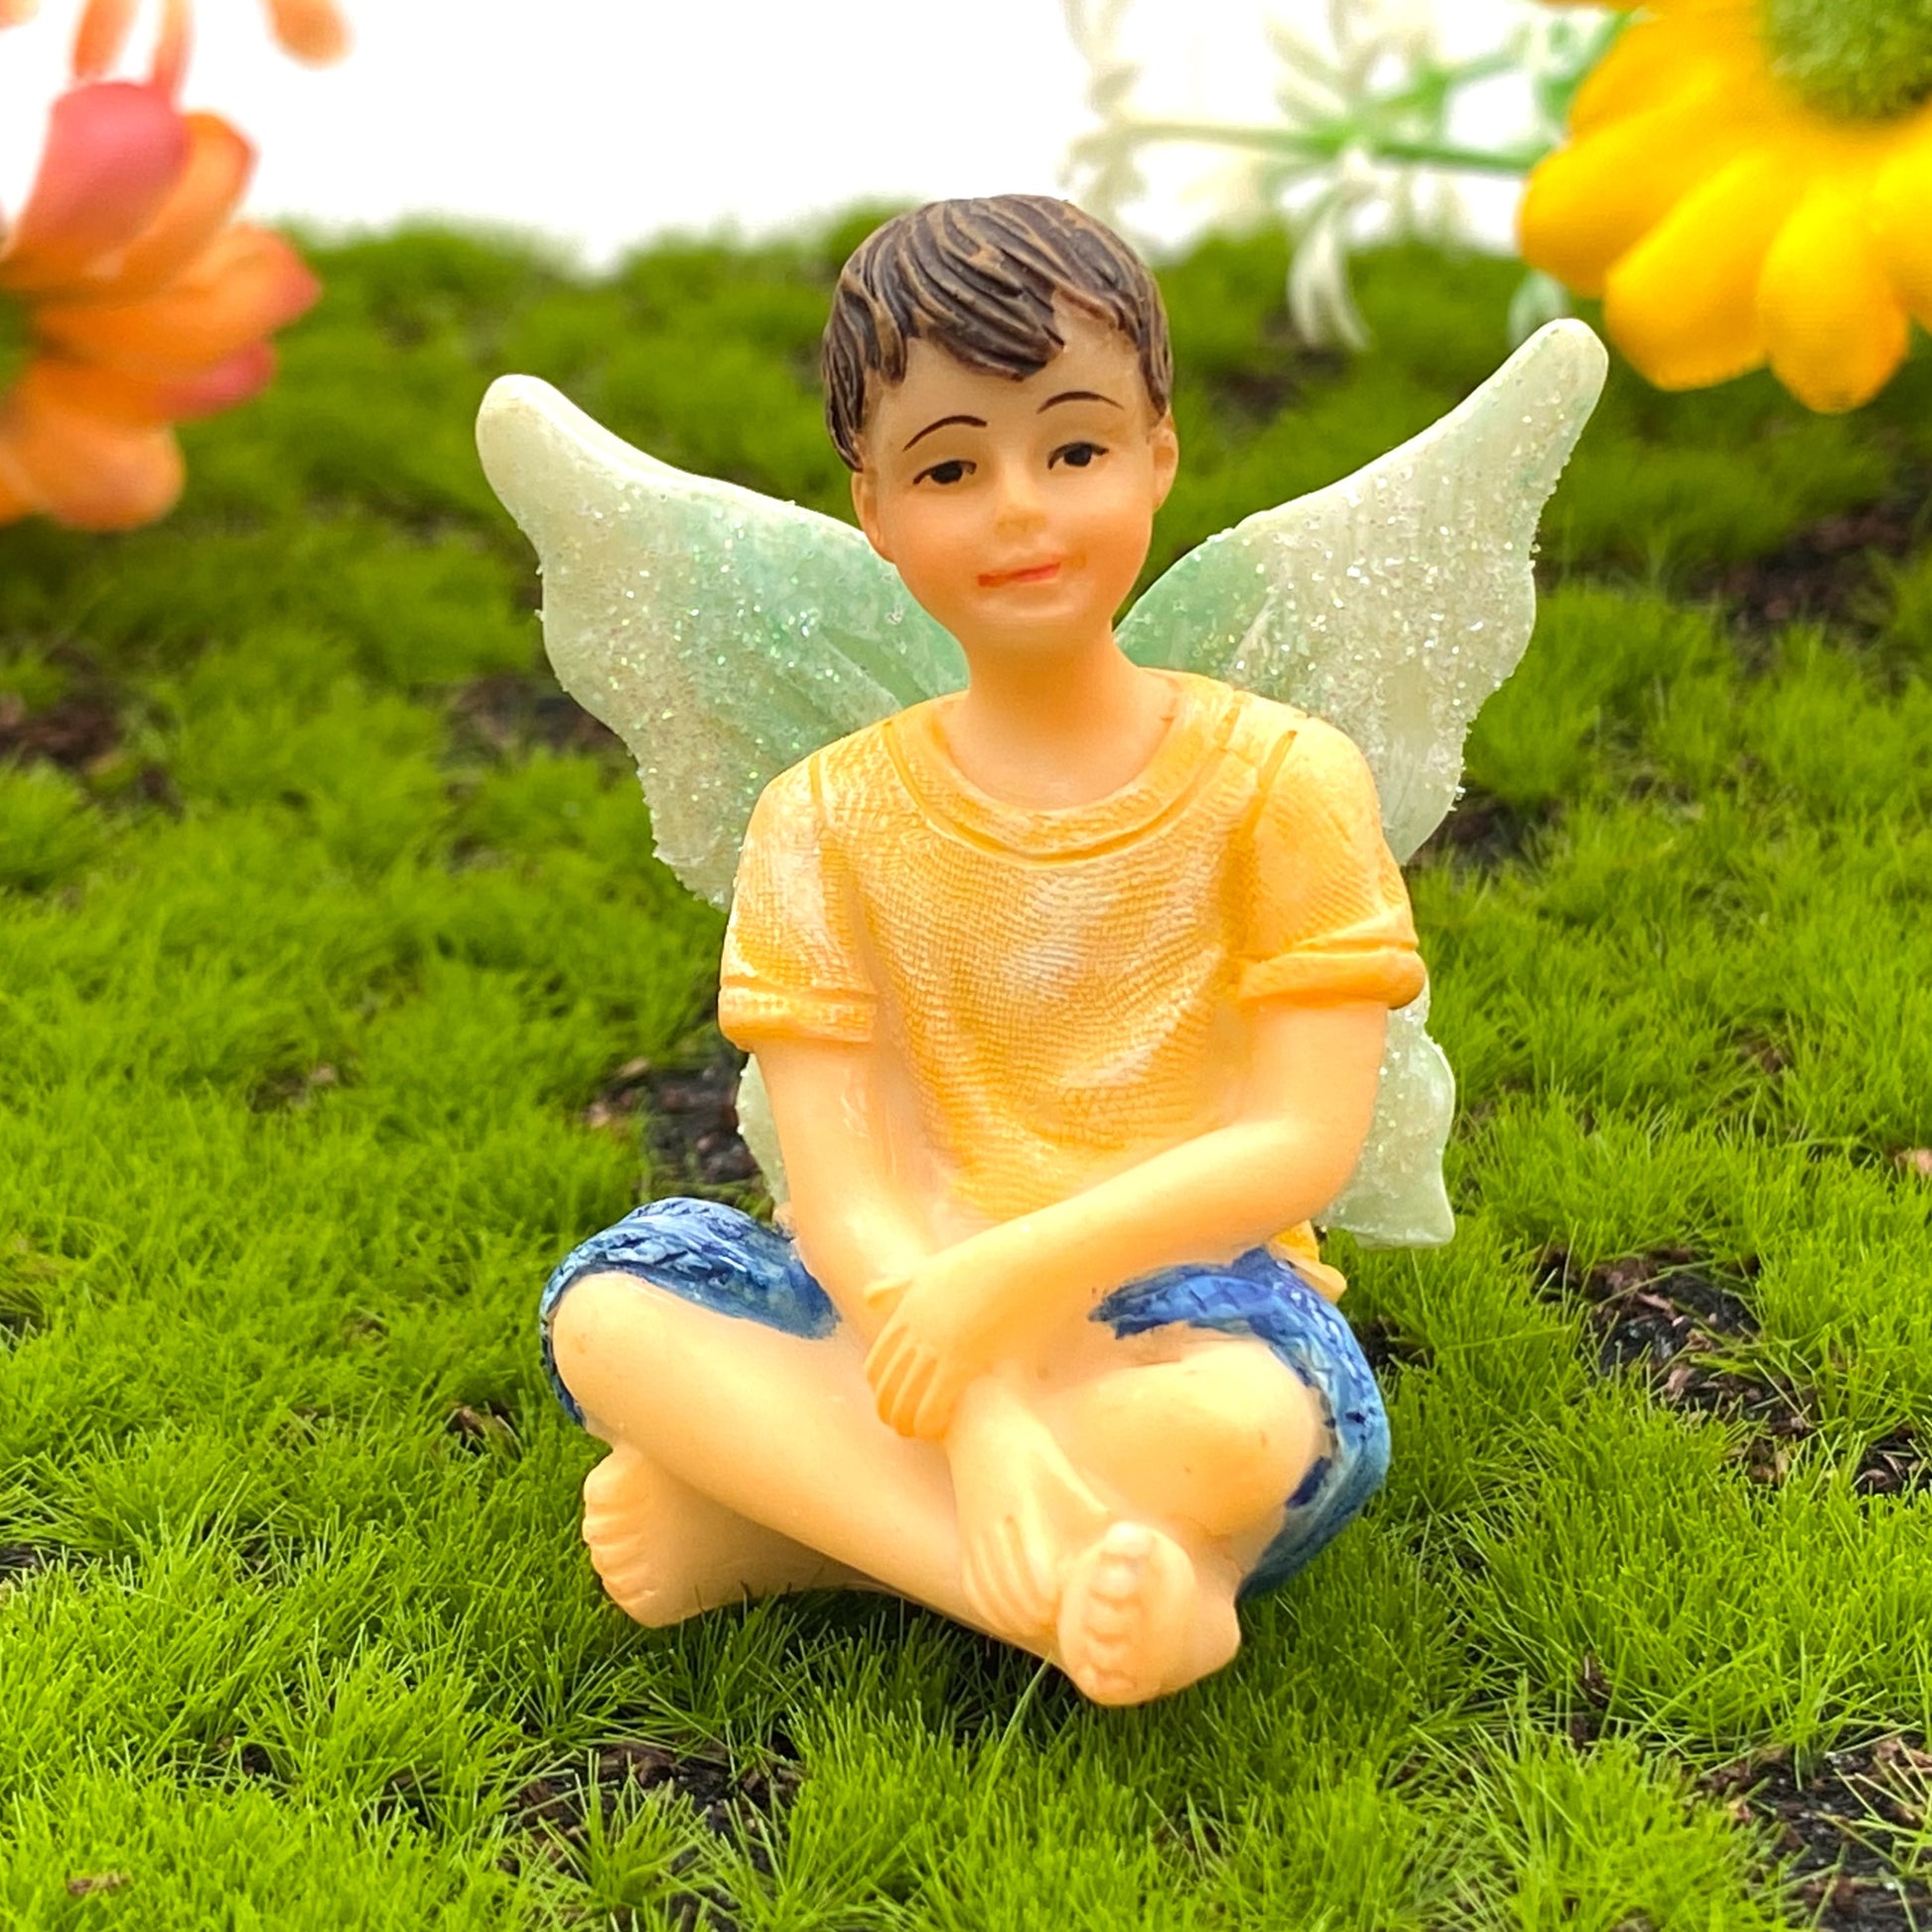 A boy fairy miniature figurine seated with crossed legs.